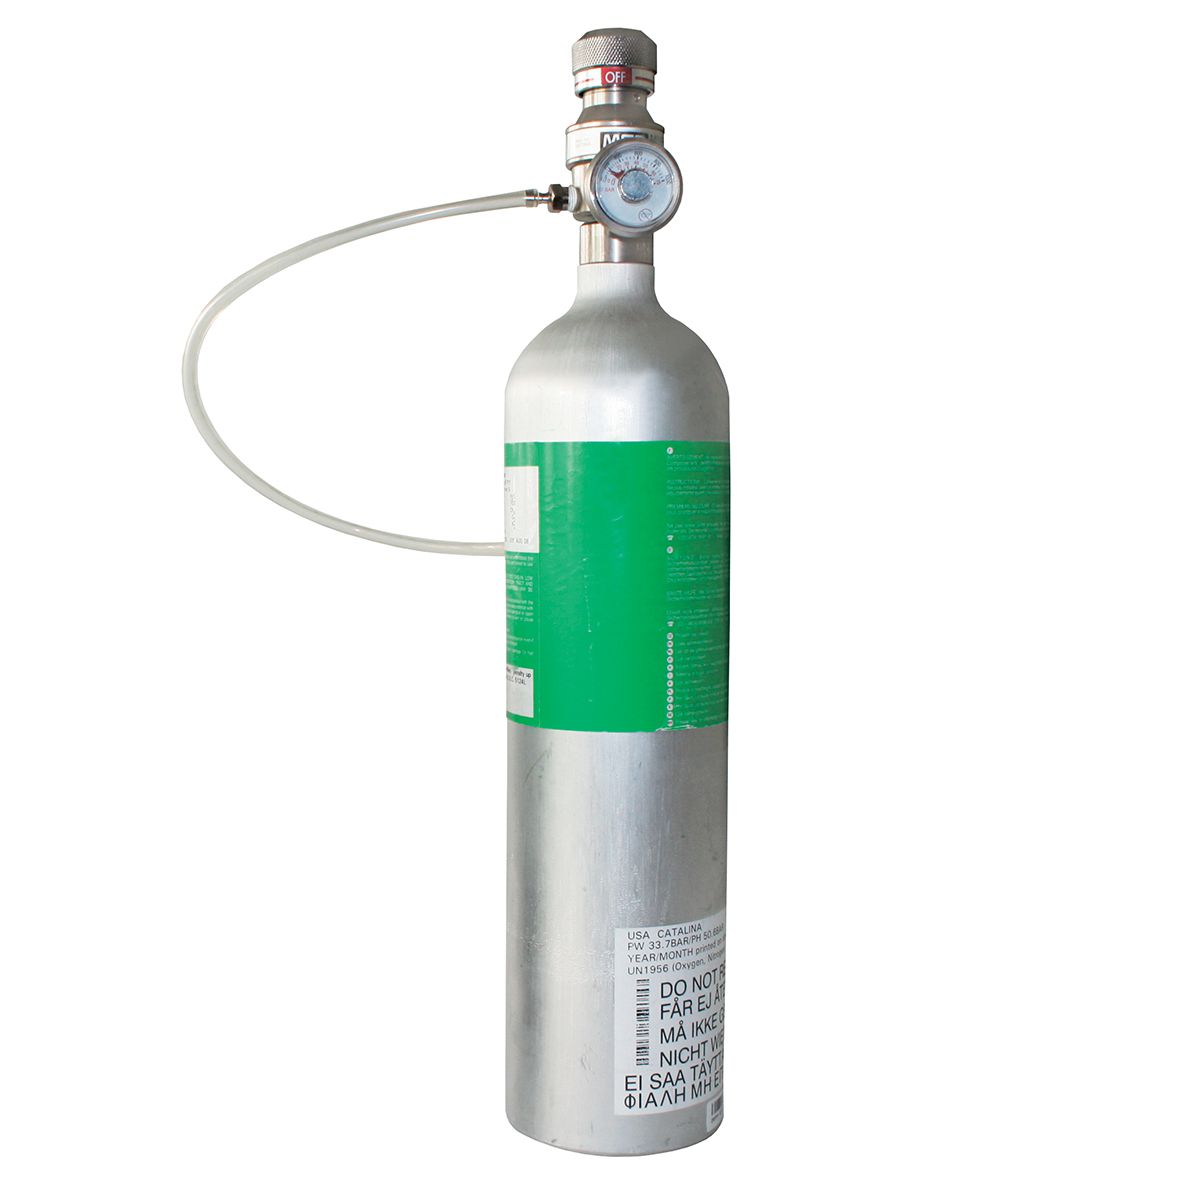 MSA Mischgasflasche 58 L - 0,4 Vol% C3H8, 15 Vol% O2